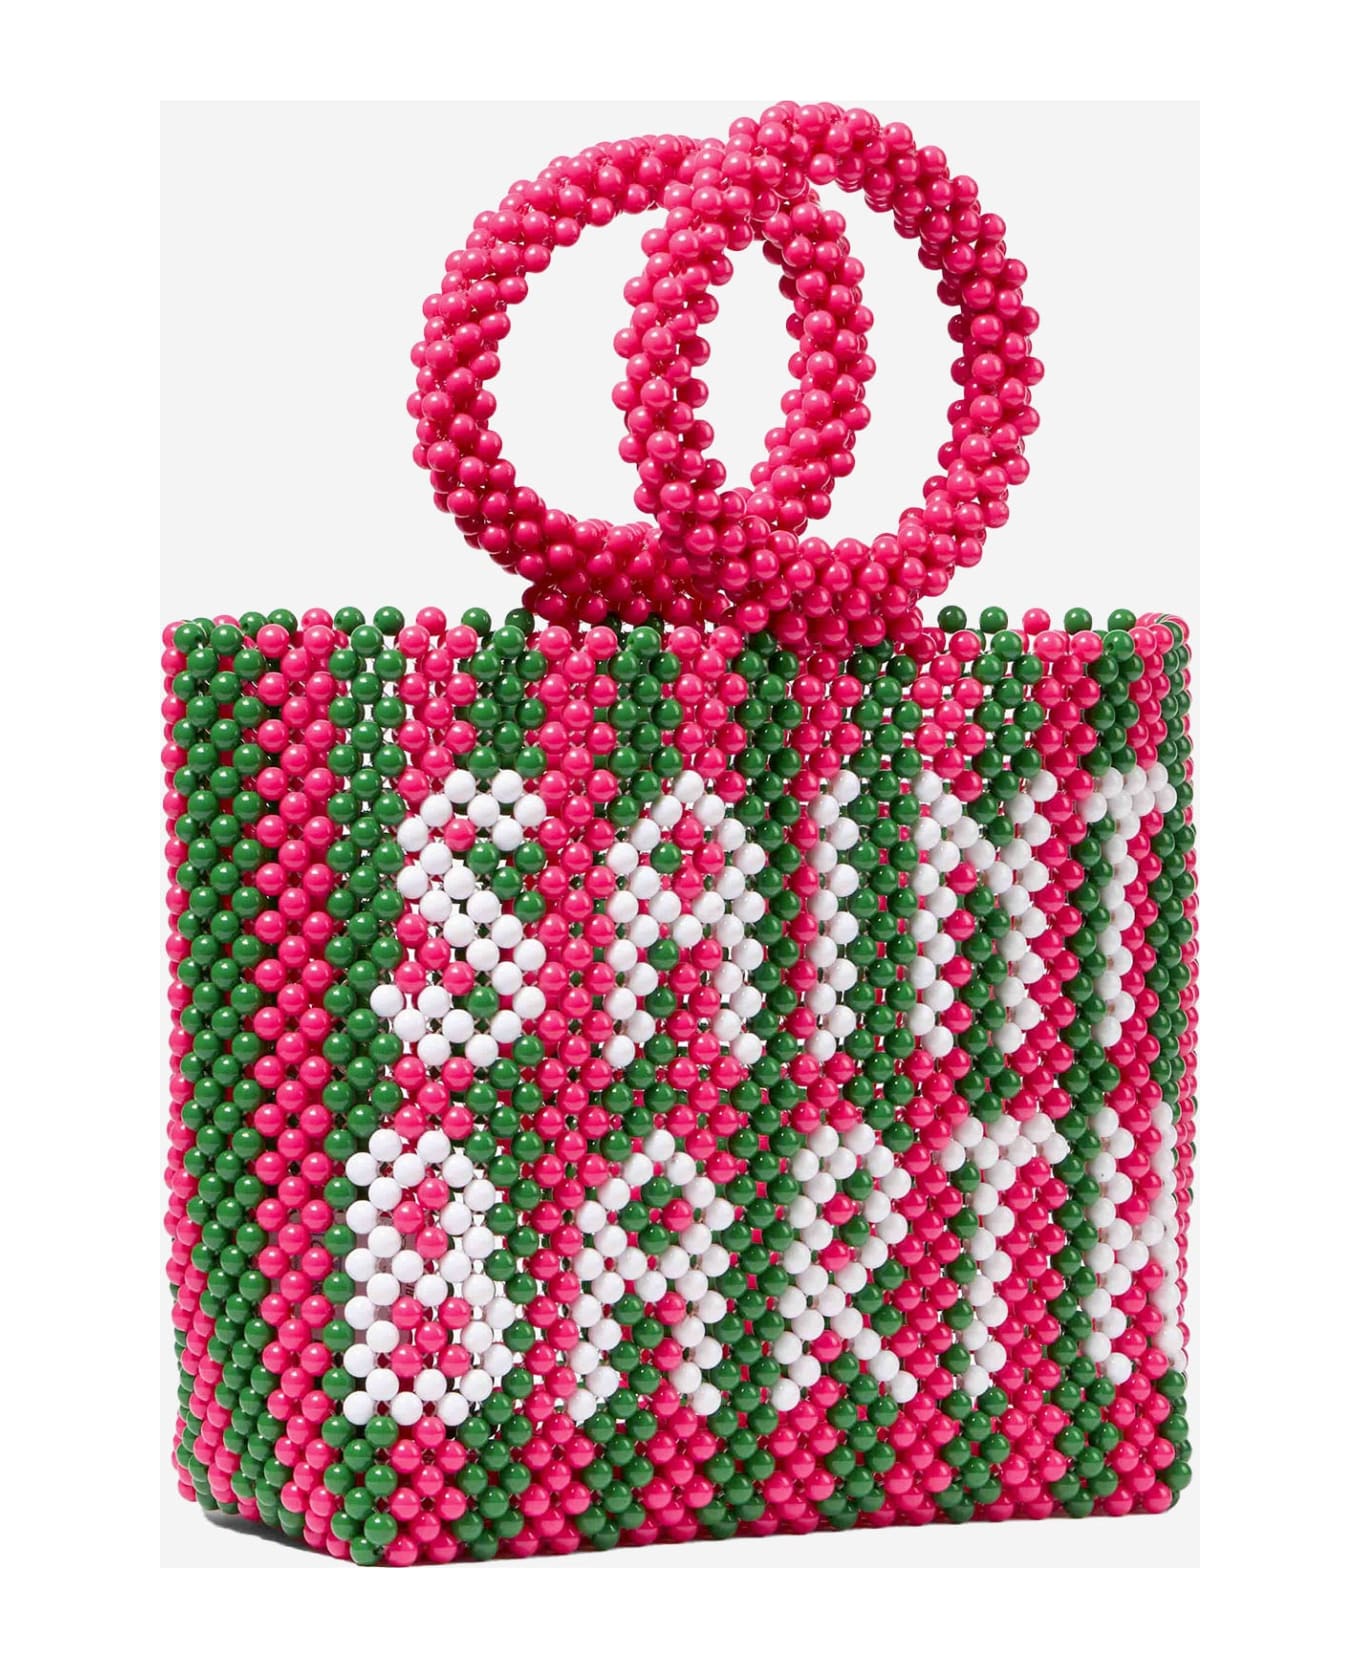 MC2 Saint Barth Beaded Handbag With Pink And Green Stripes - PINK